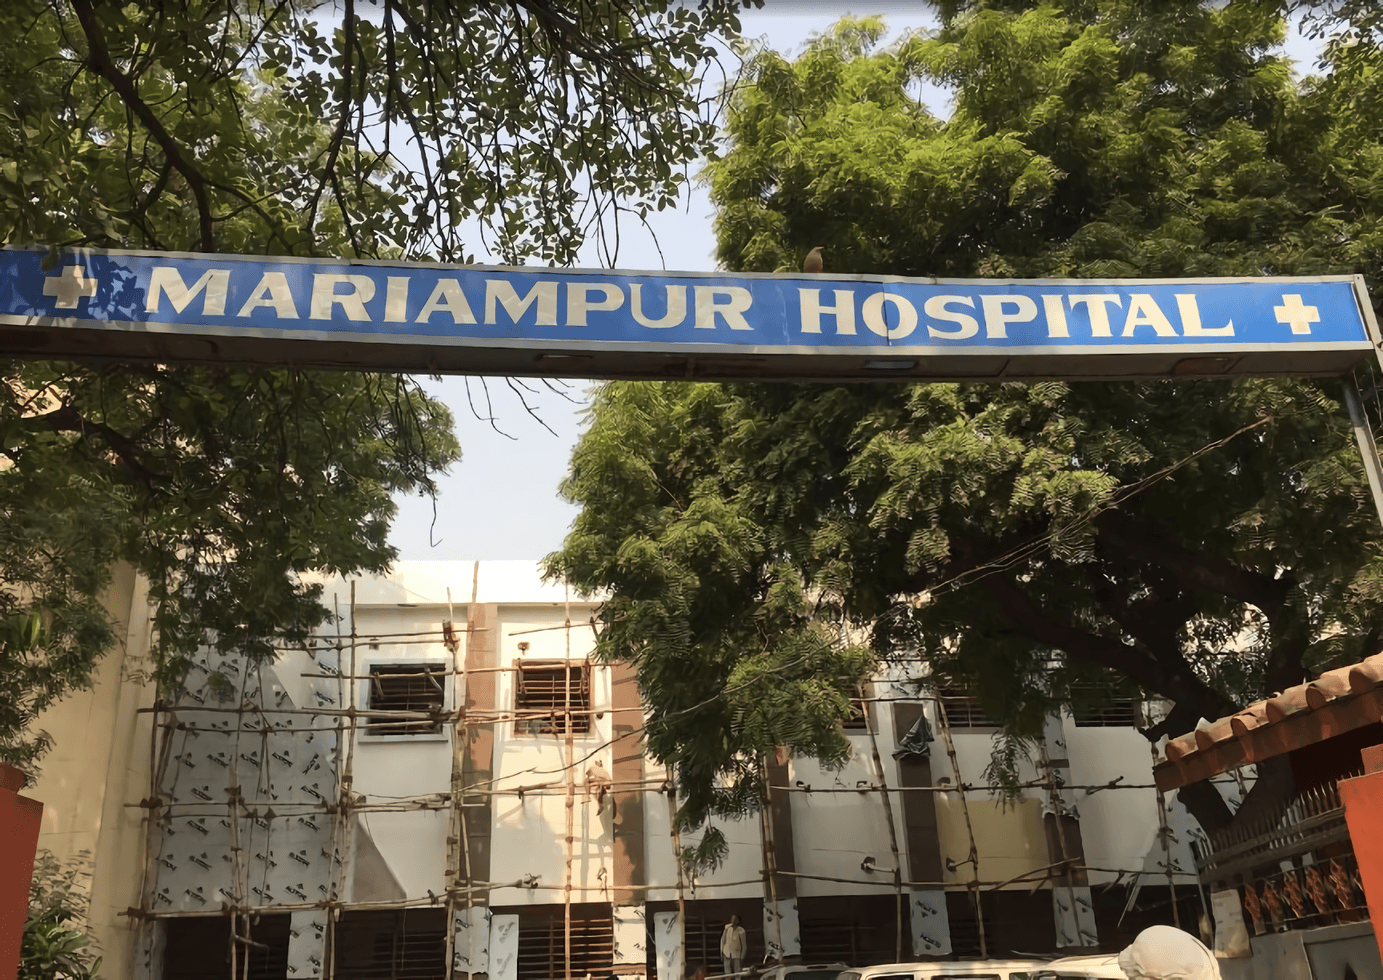 Mariampur Hospital